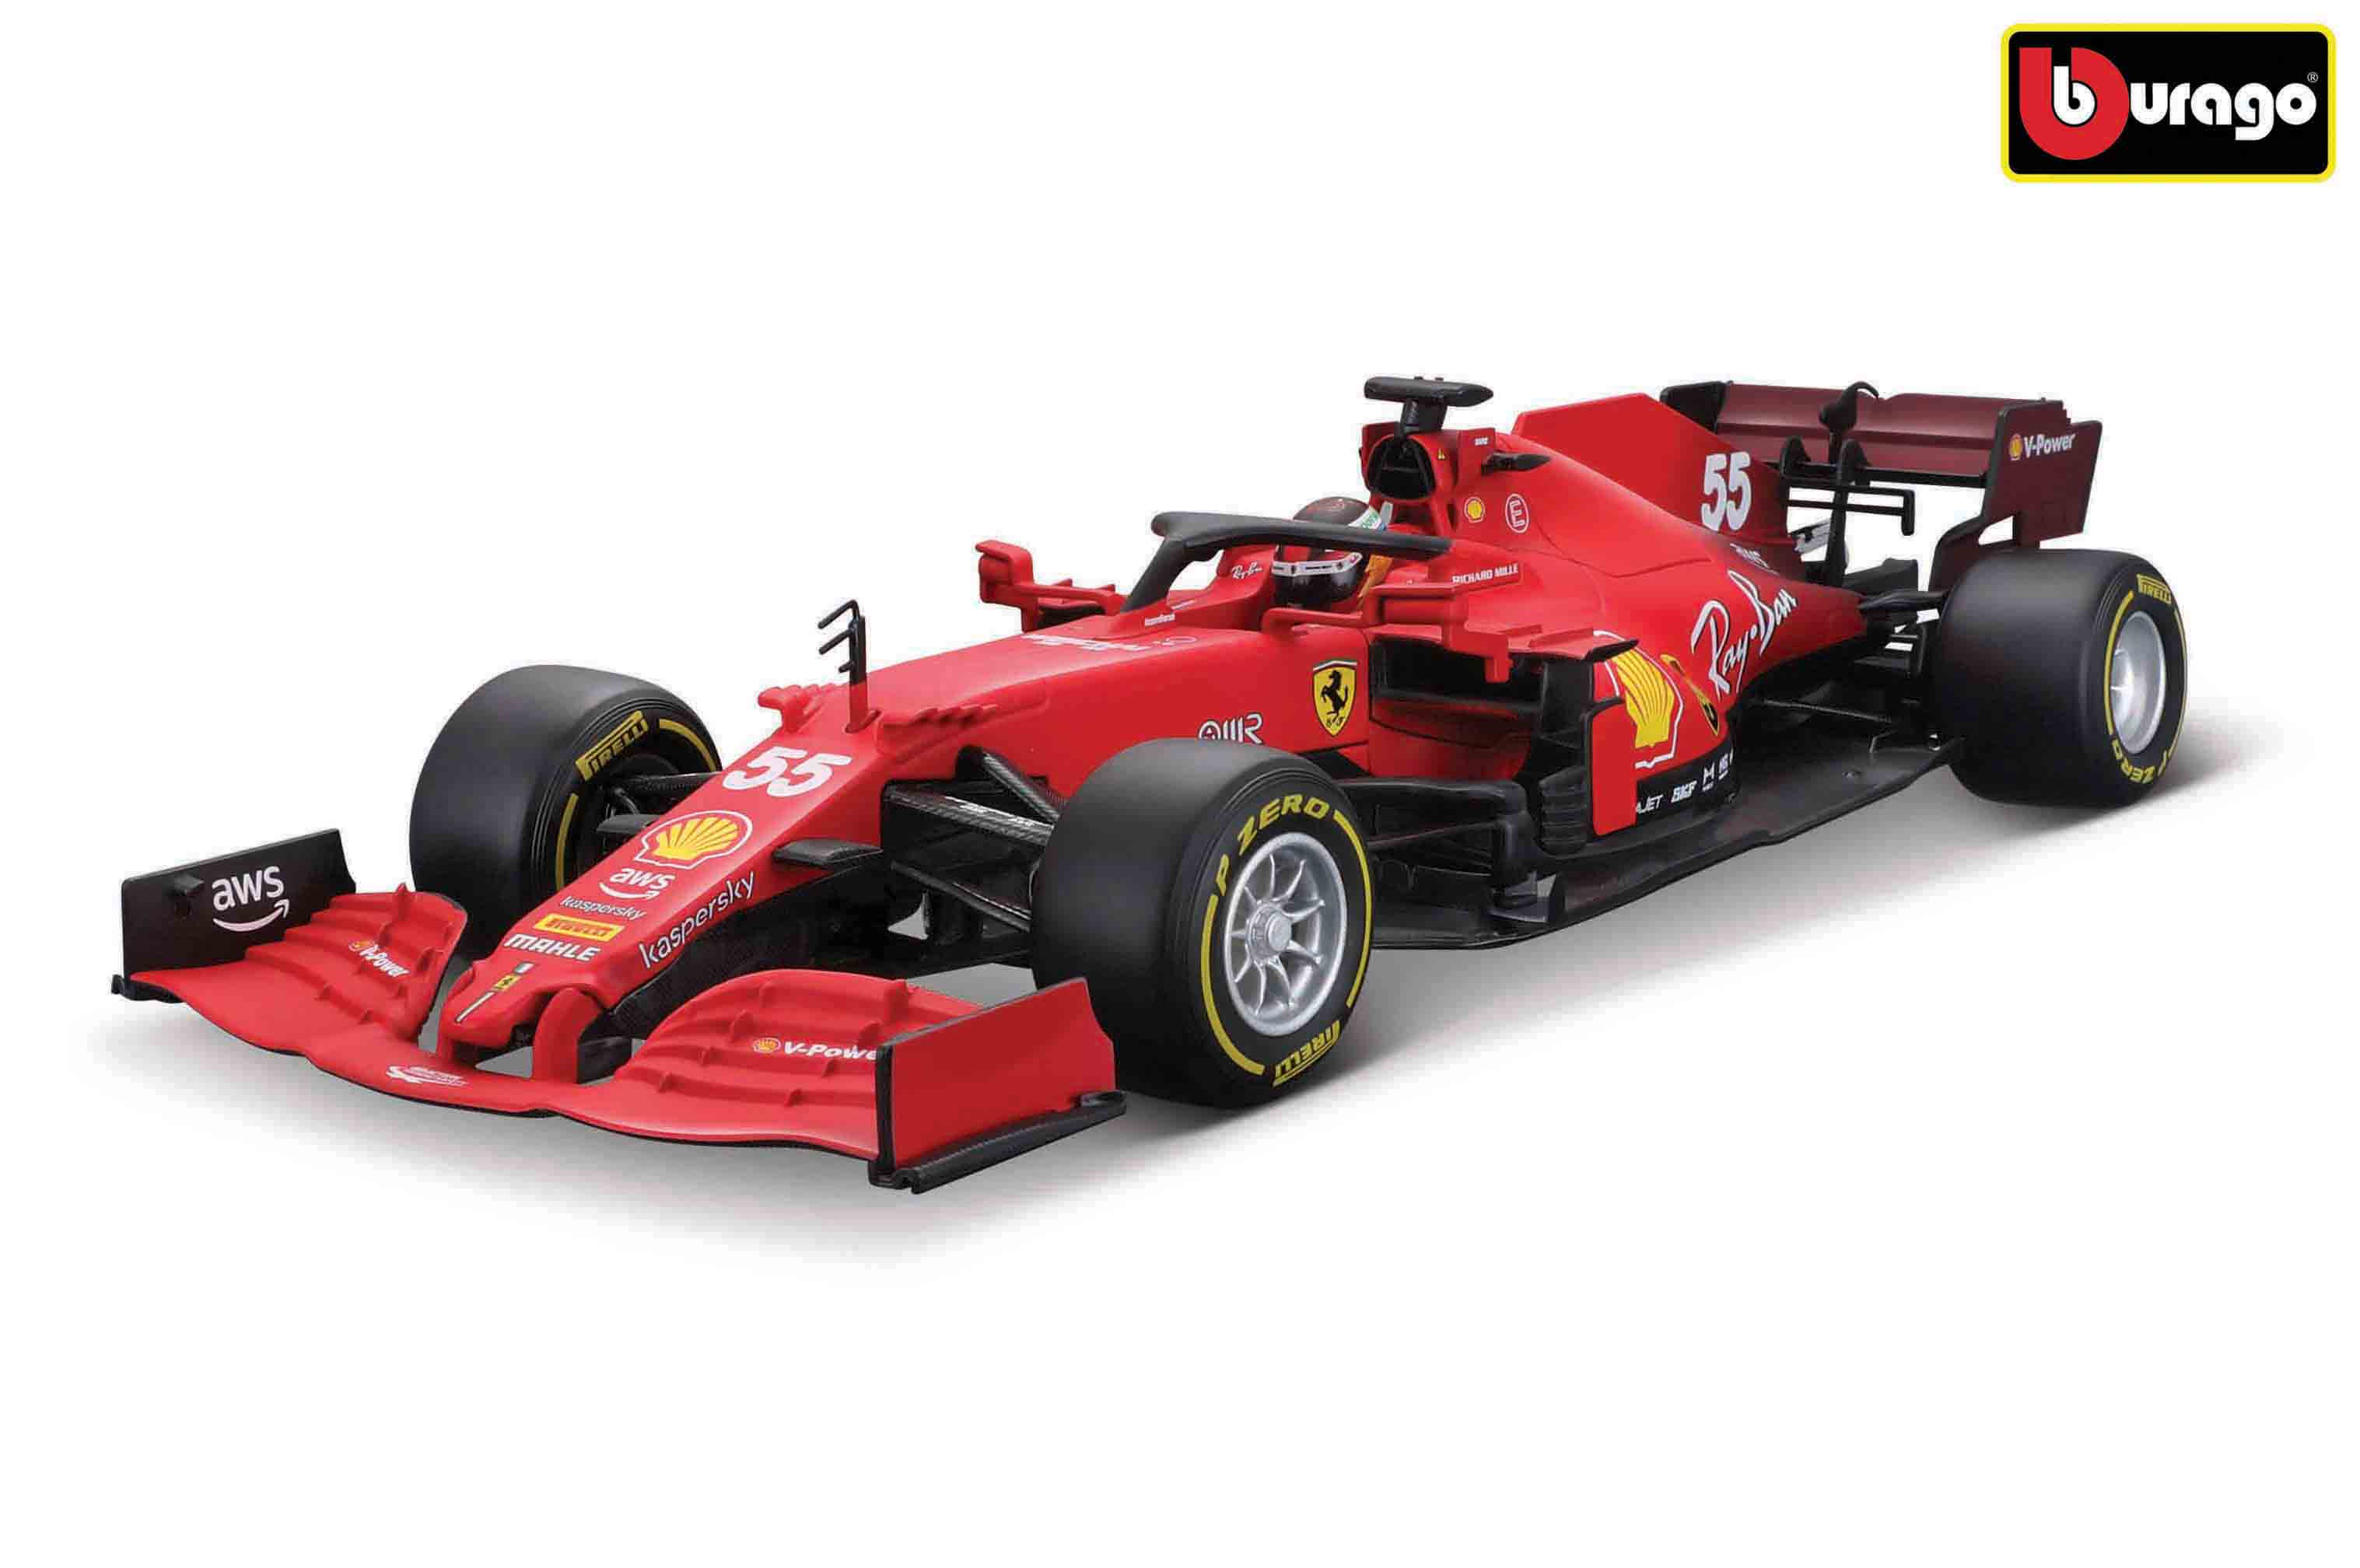 Bburago 1:18 Ferrari Racing - SF21 - #55 Carlos Sainz